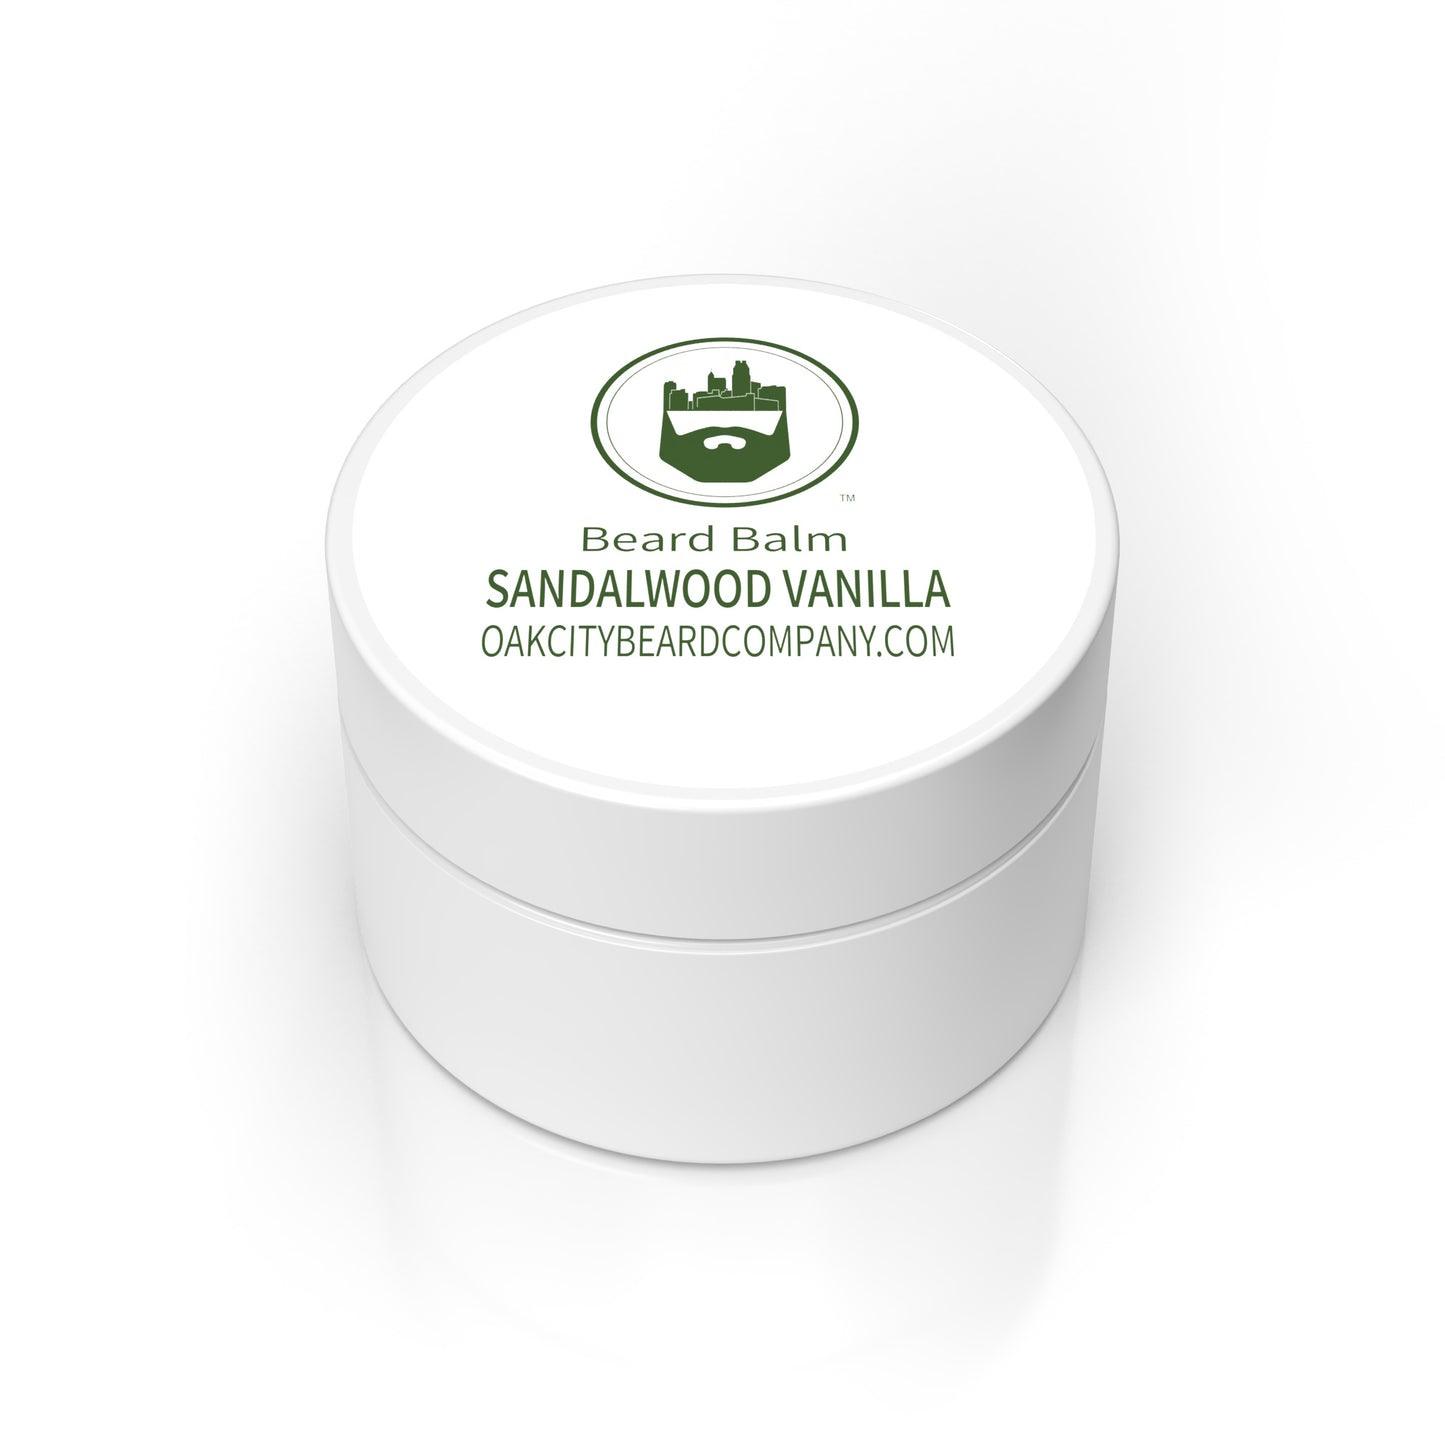 Sandalwood Vanilla (Beard Balm) by Oak City Beard Company